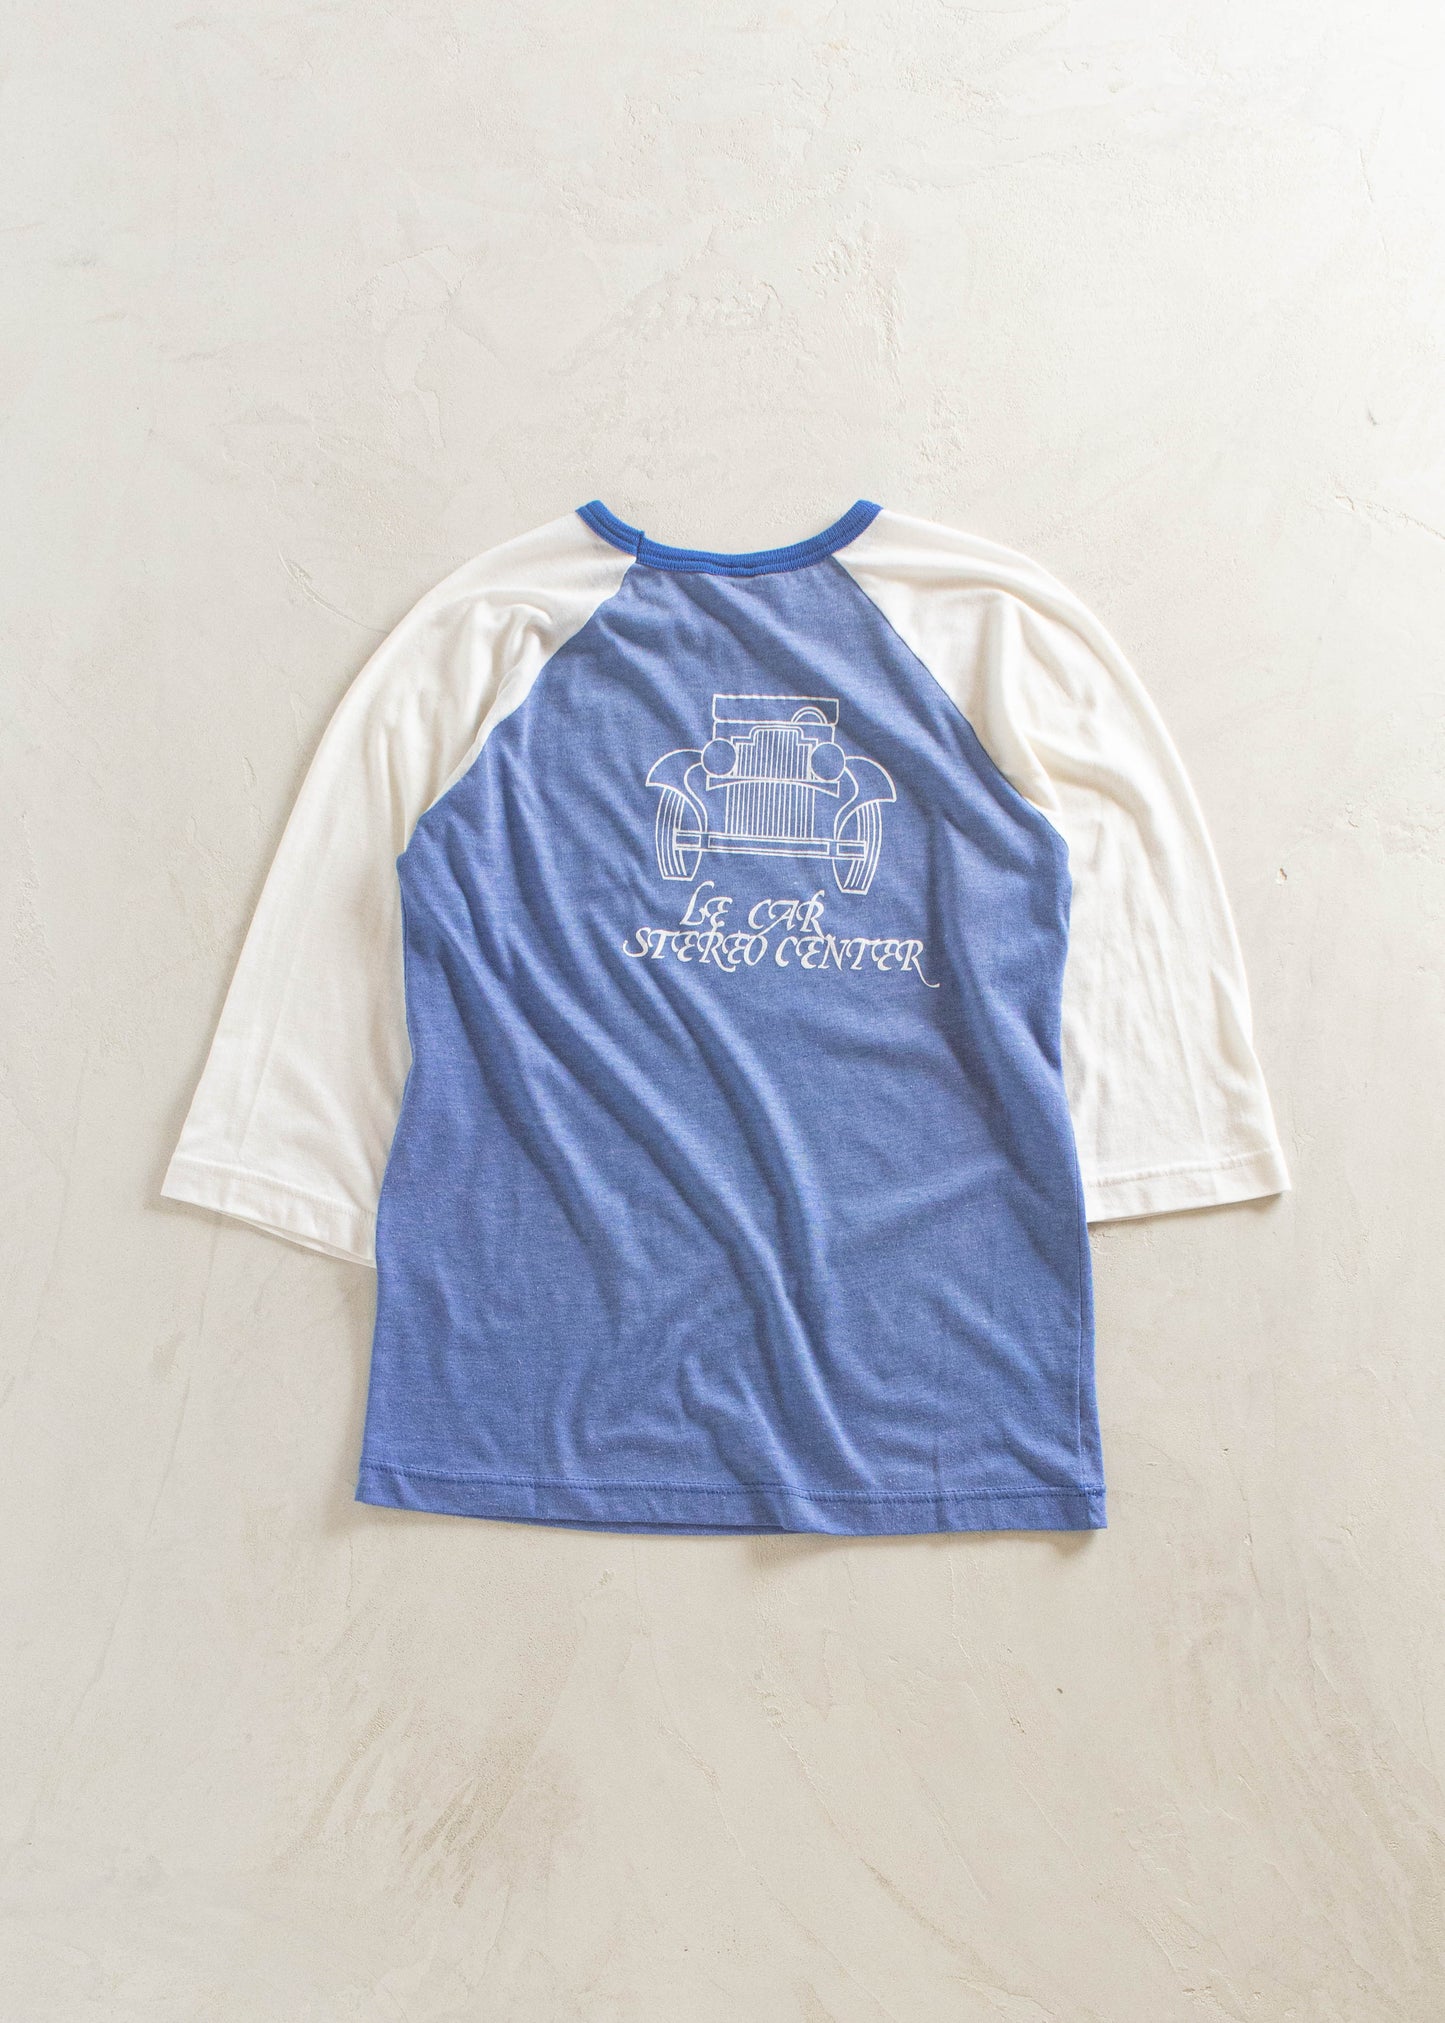 1980s Laval Youth Organization Baseball Raglan T-Shirt Size S/M